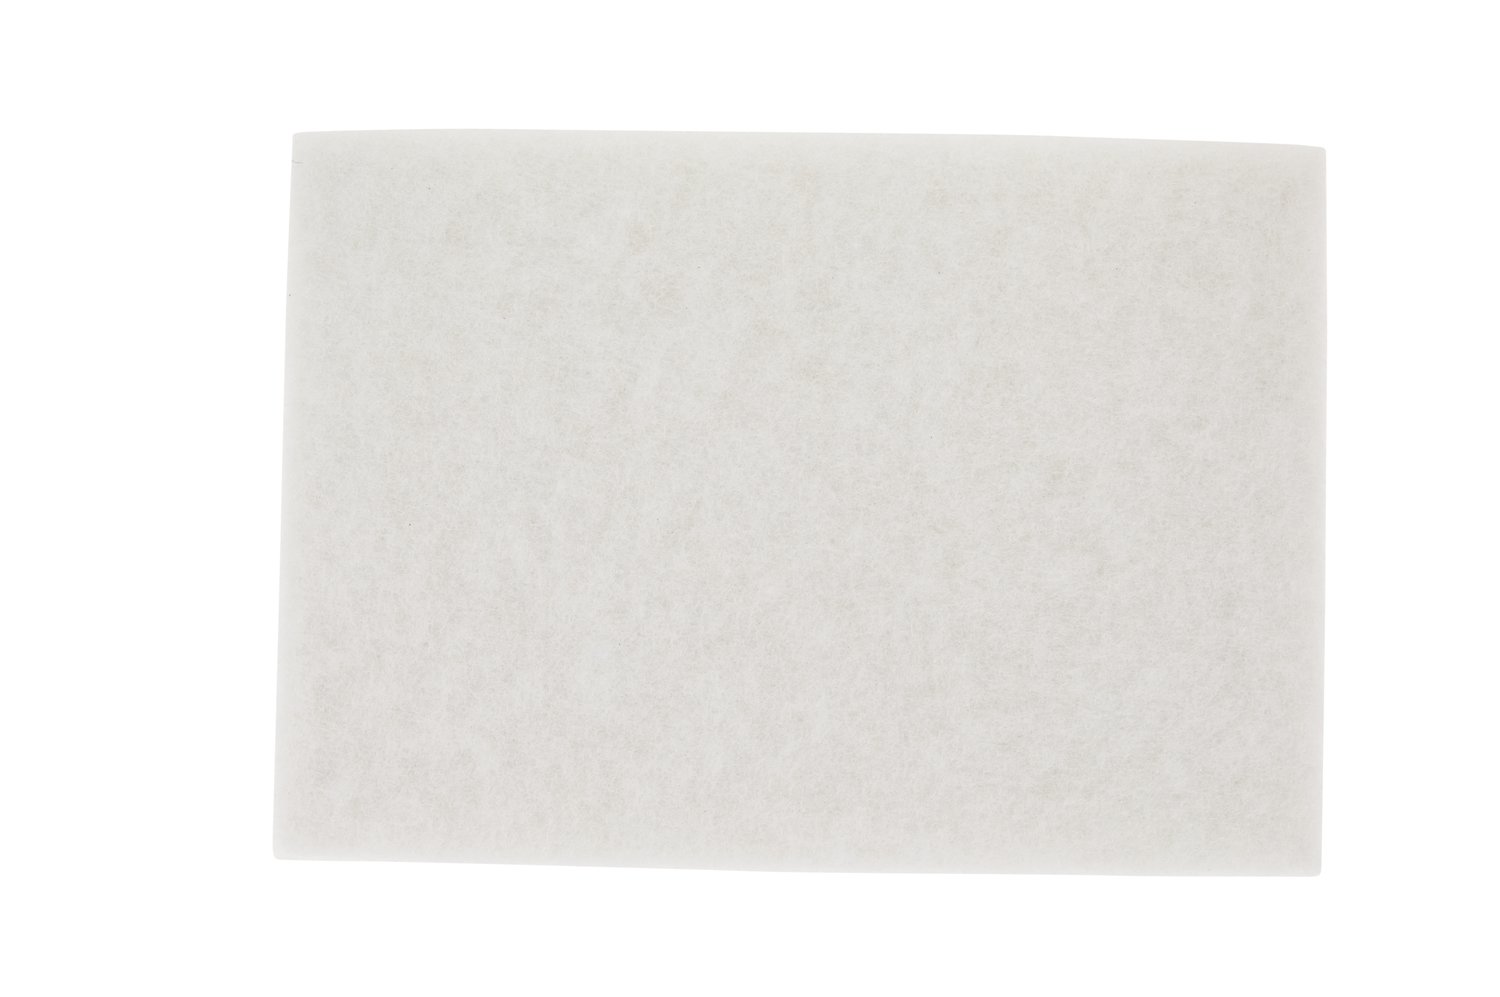 7000126870 - 3M White Super Polish Pad 4100, 20 in x 14 in, 10/Case